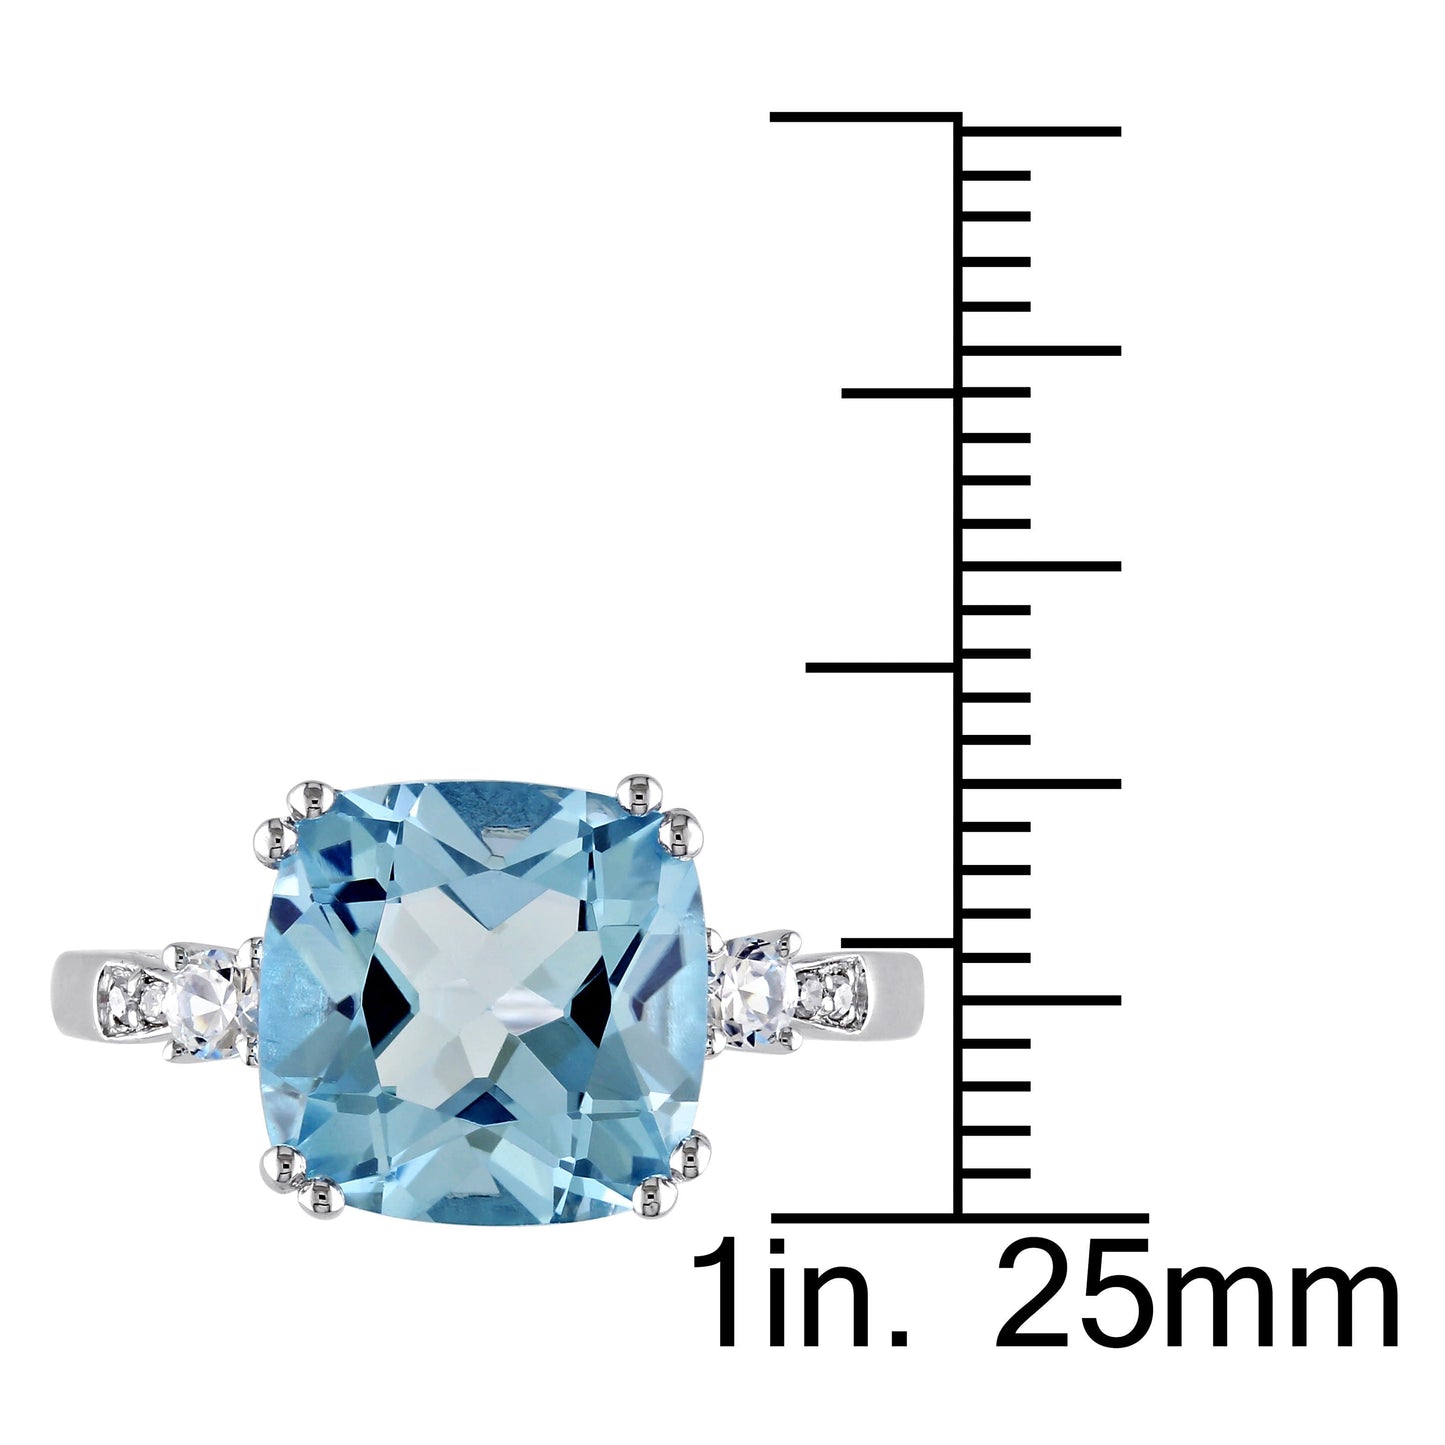 Sophia B 5 5/8 Blue Topaz, Created White Sapphire & Diamond Ring